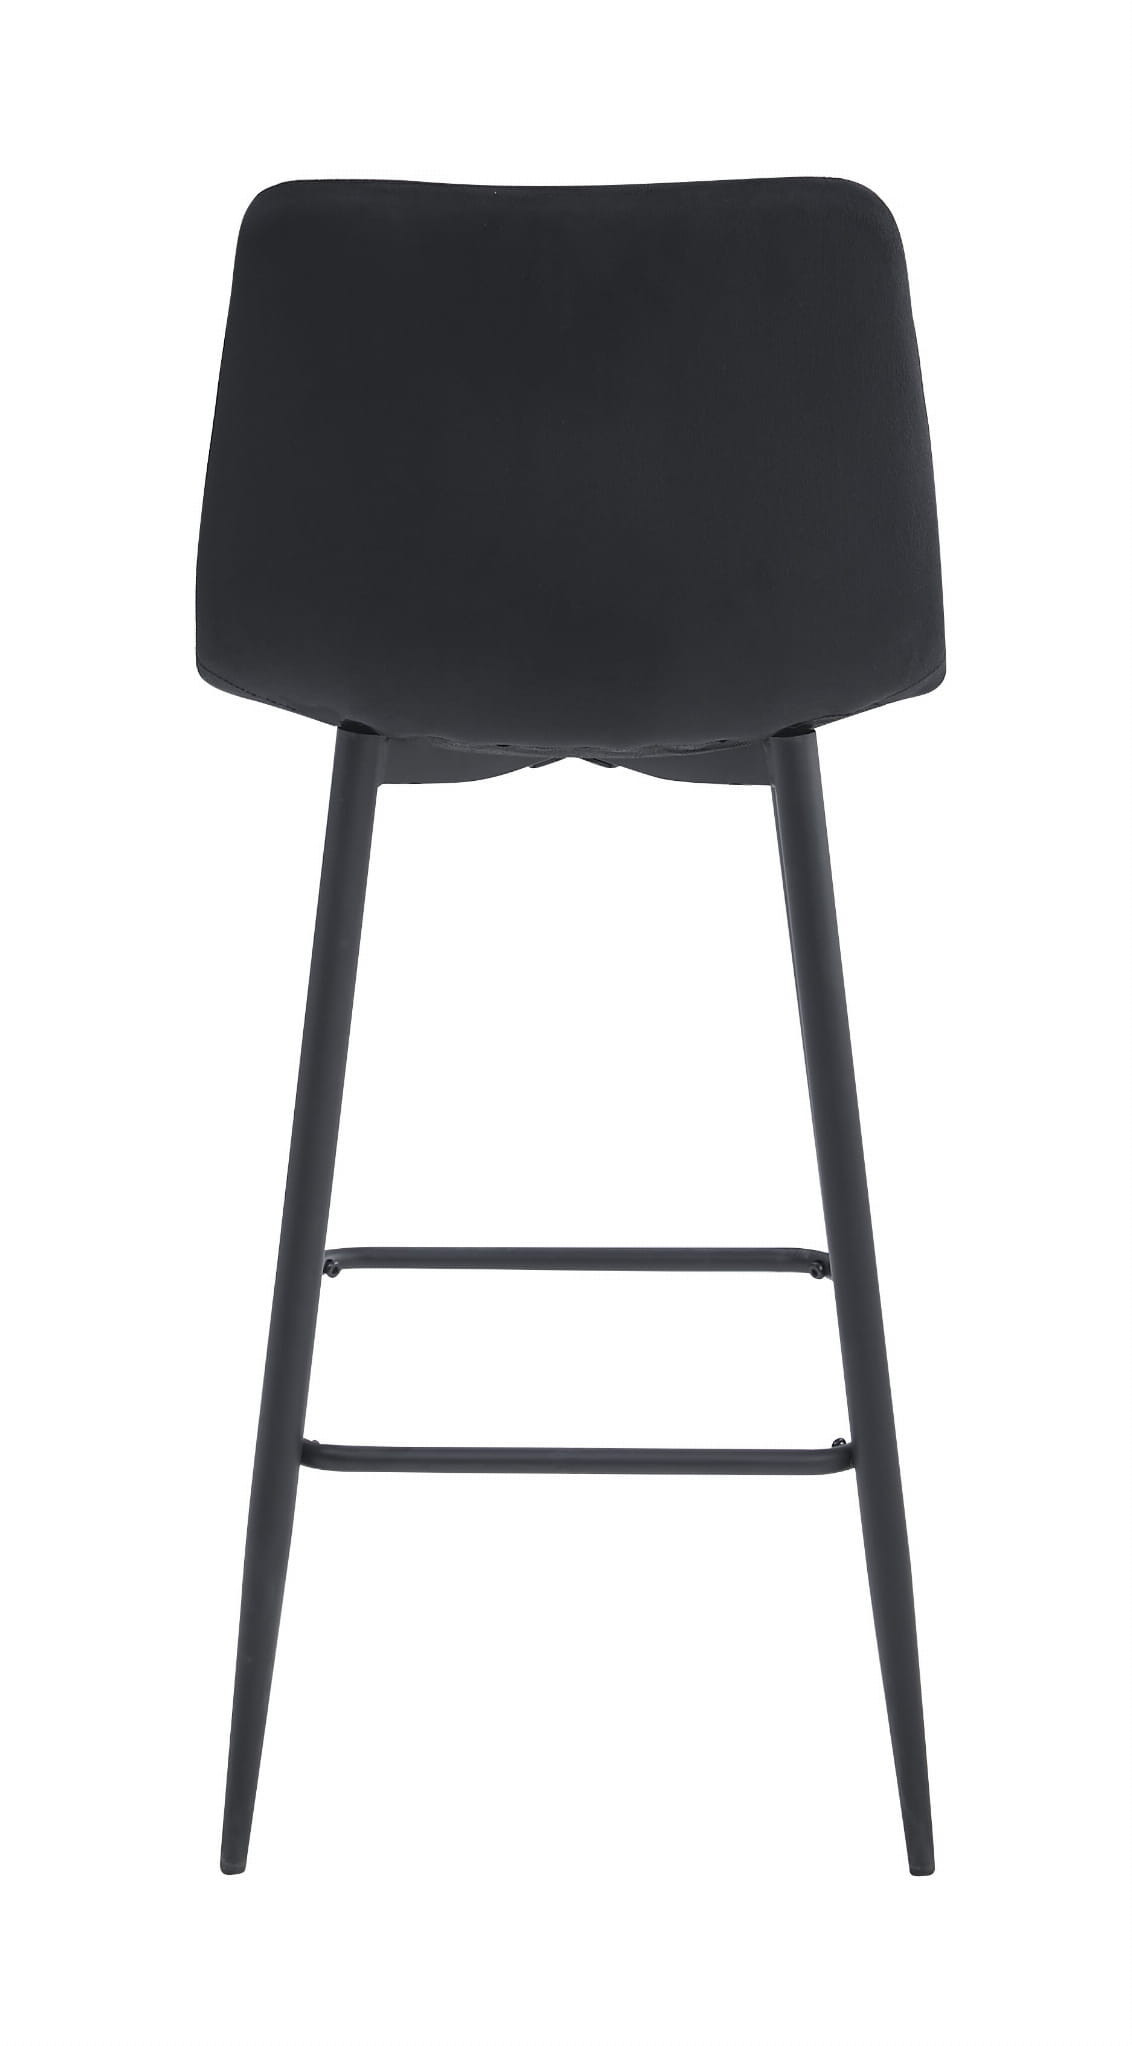 Set štyroch barových stoličiek ARCETO zamatové čierne (čierne nohy) 4 ks